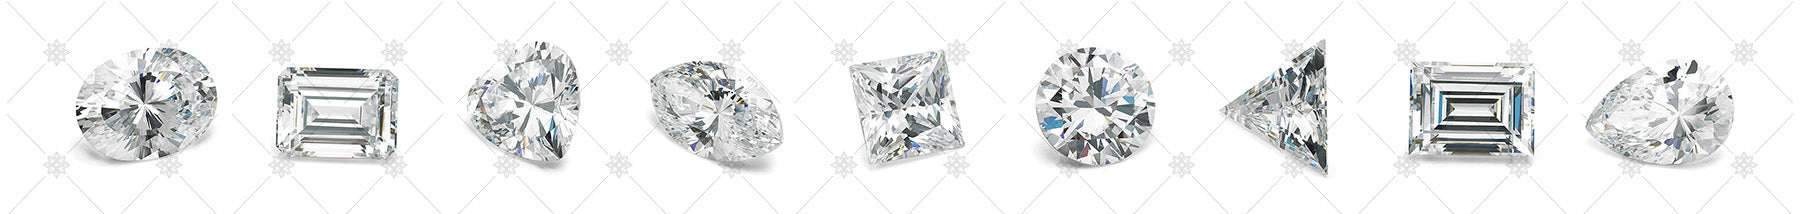 diamond shapes 